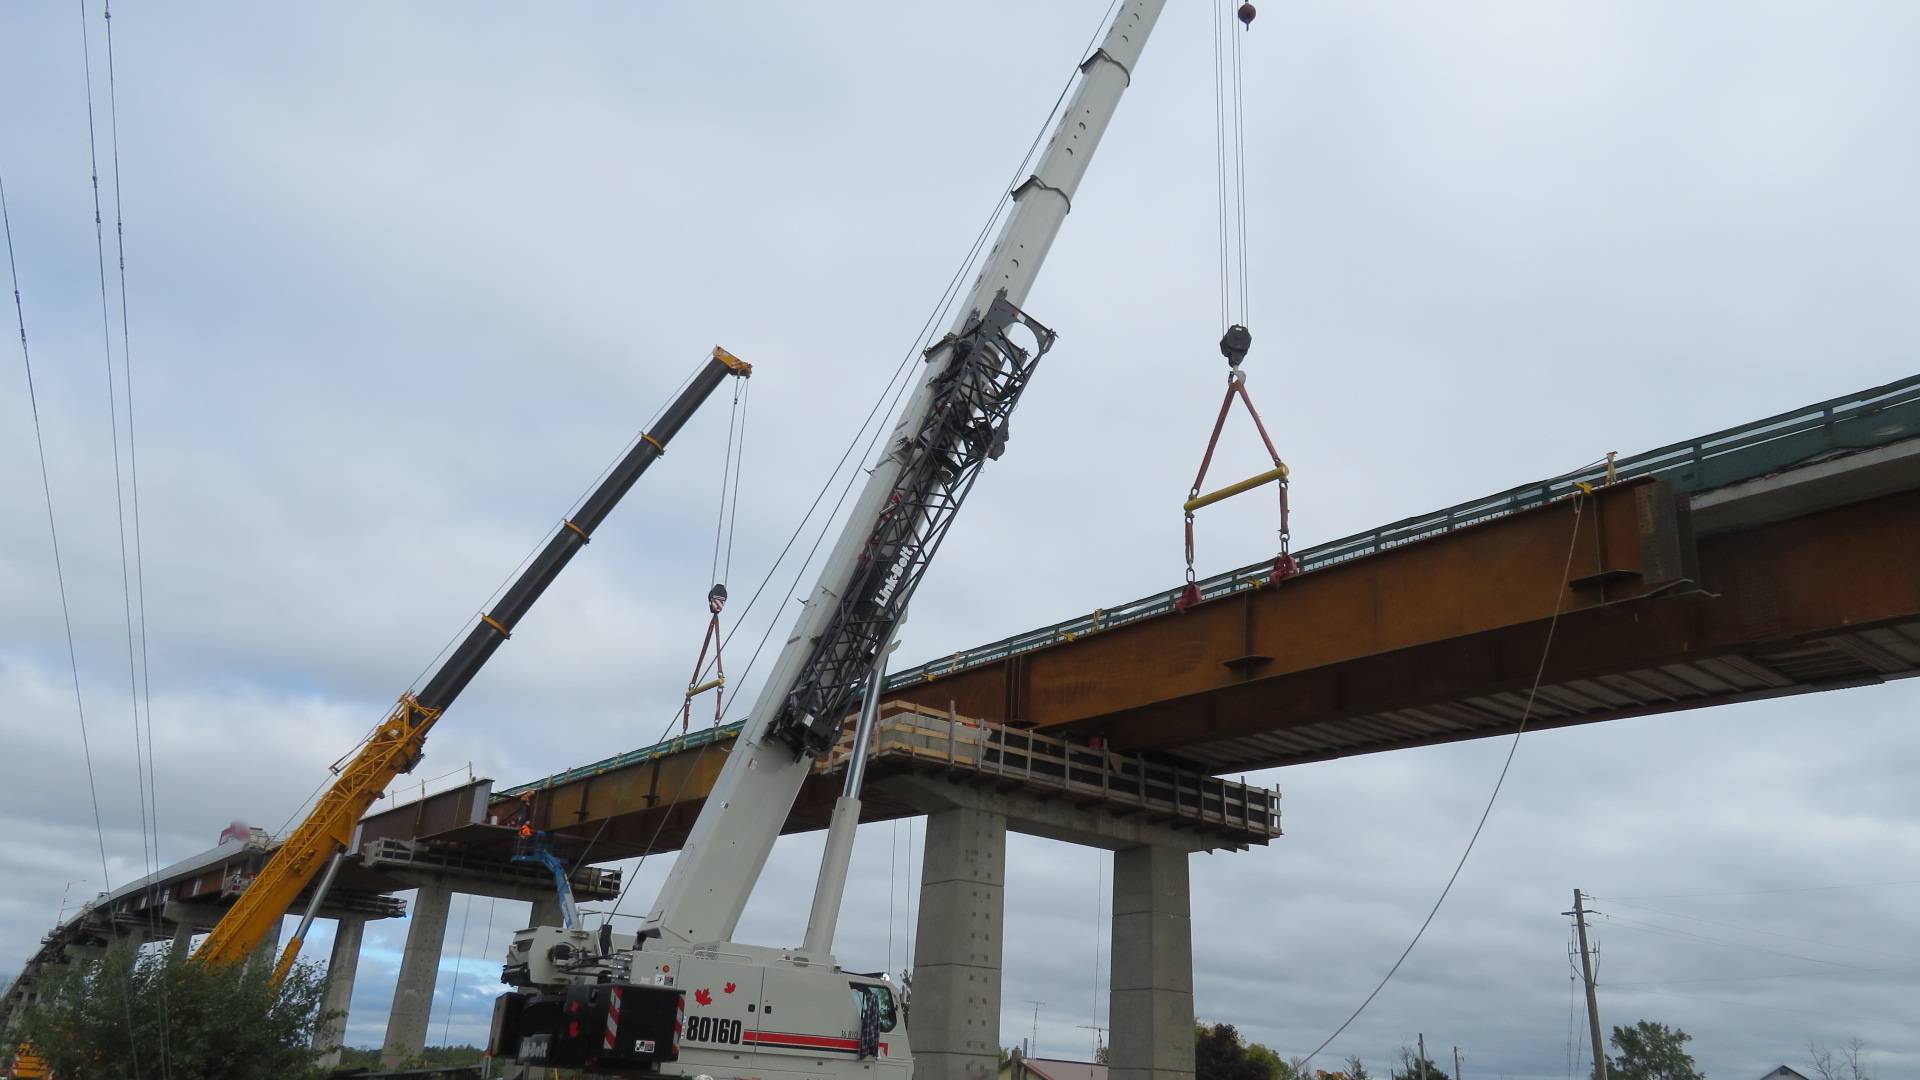 200 and 160 ton cranes, installing the third girder